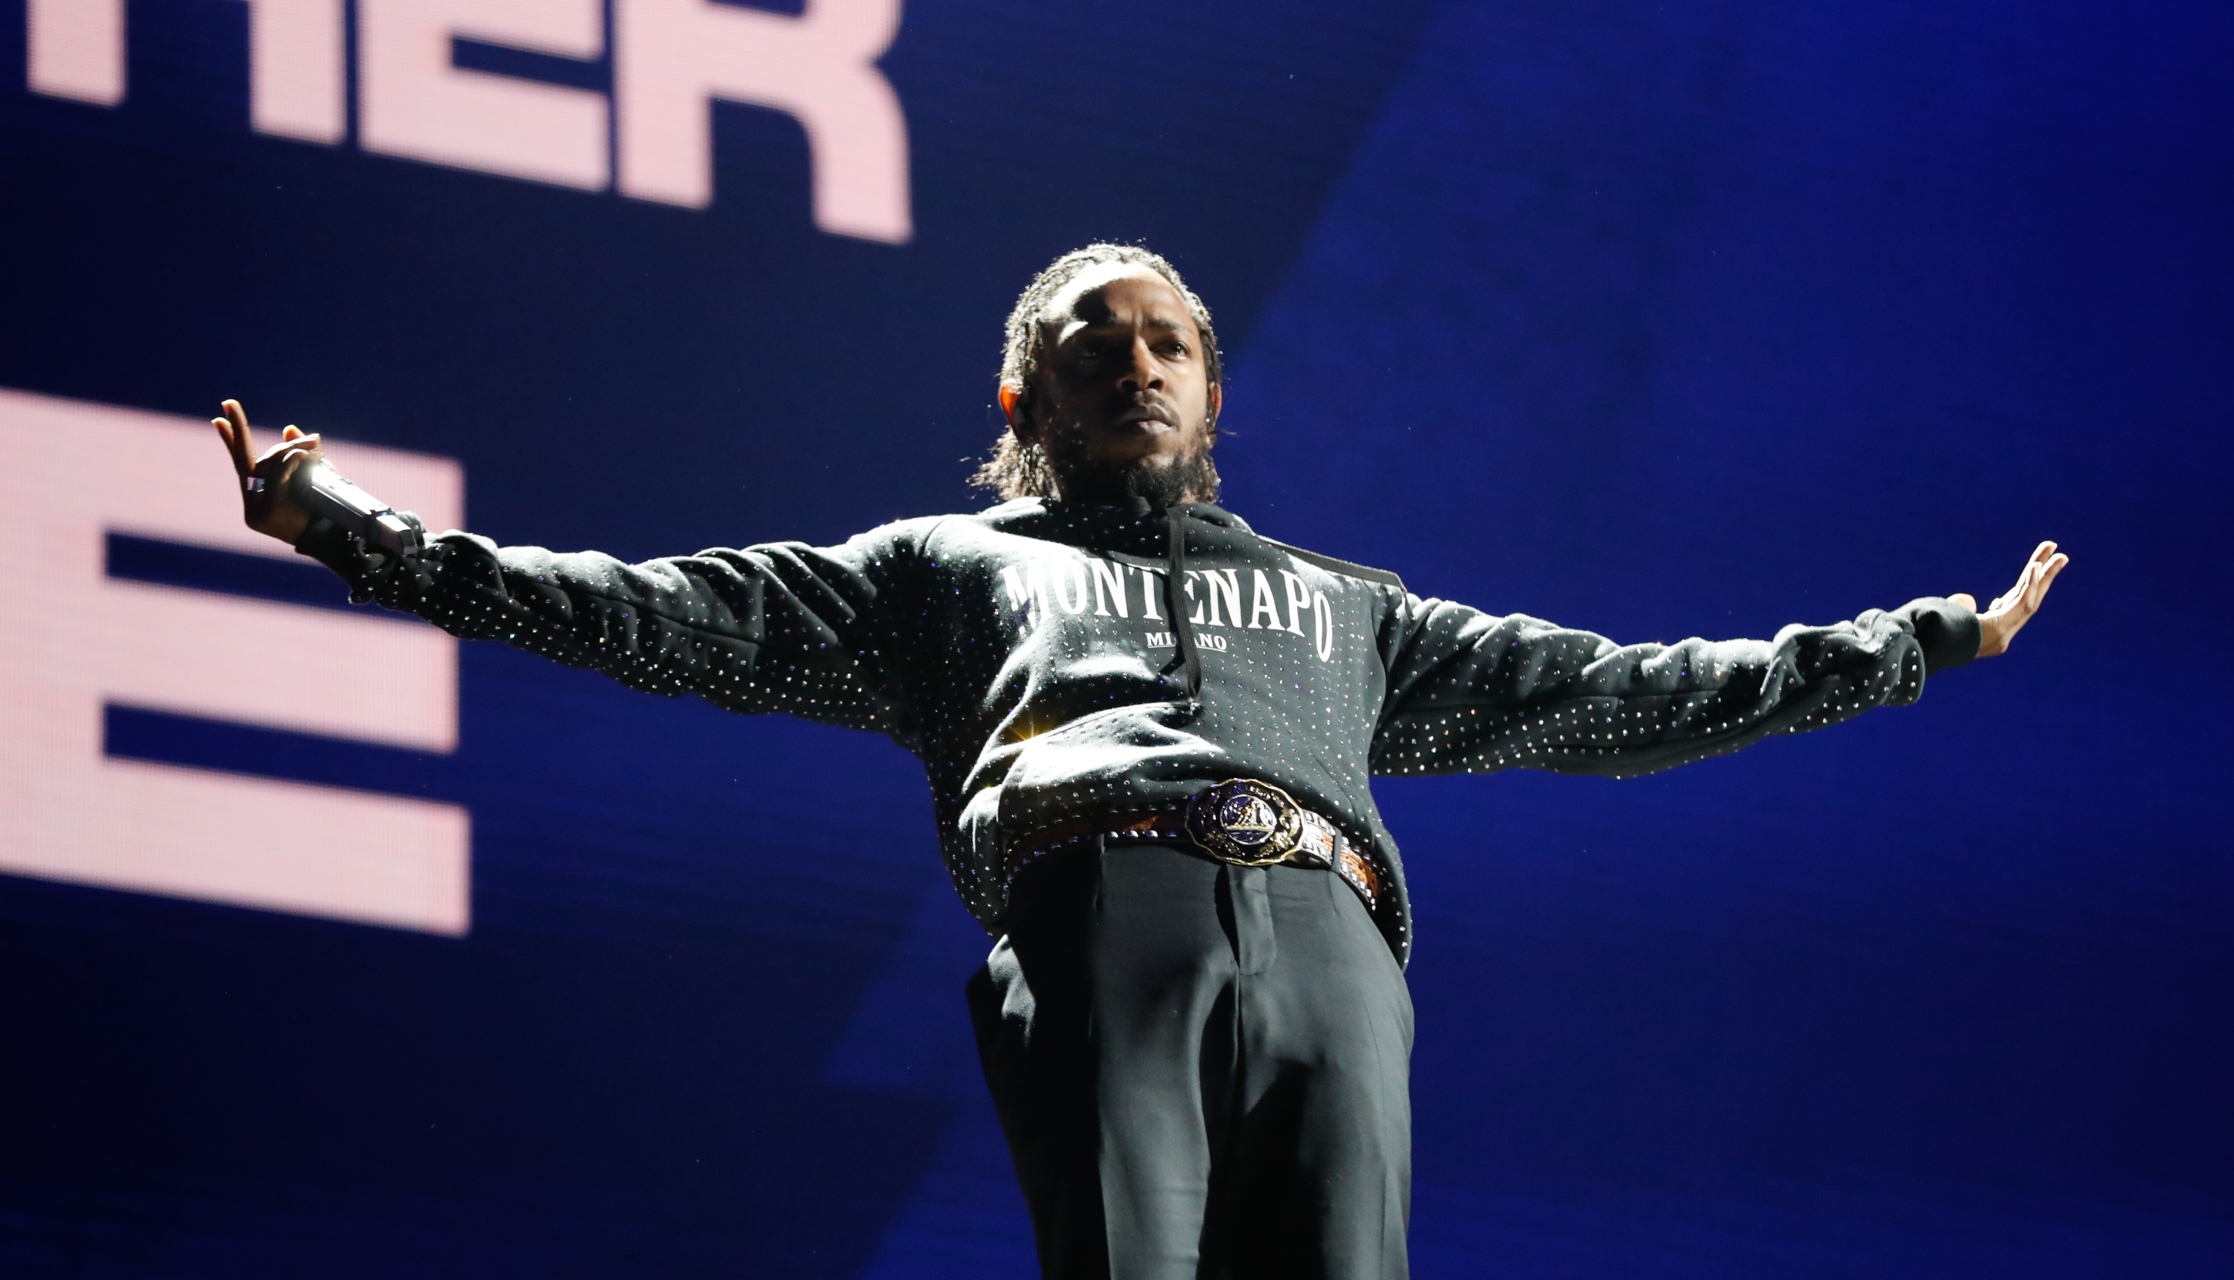 Kendrick Lamar Announces Next Album Is His Last For TDE